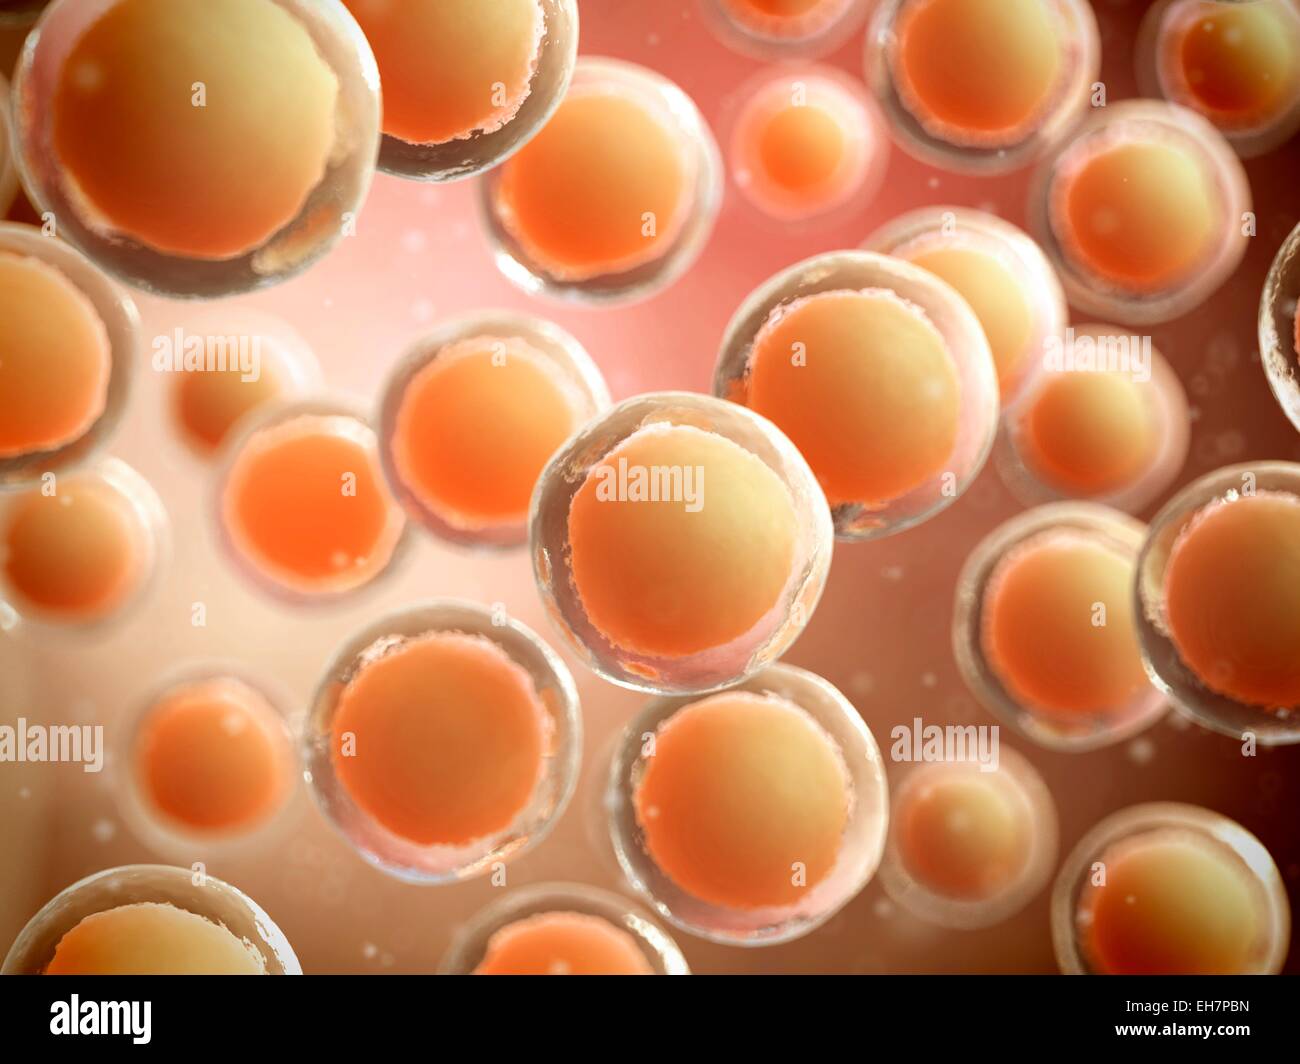 Human cells, illustration Stock Photo